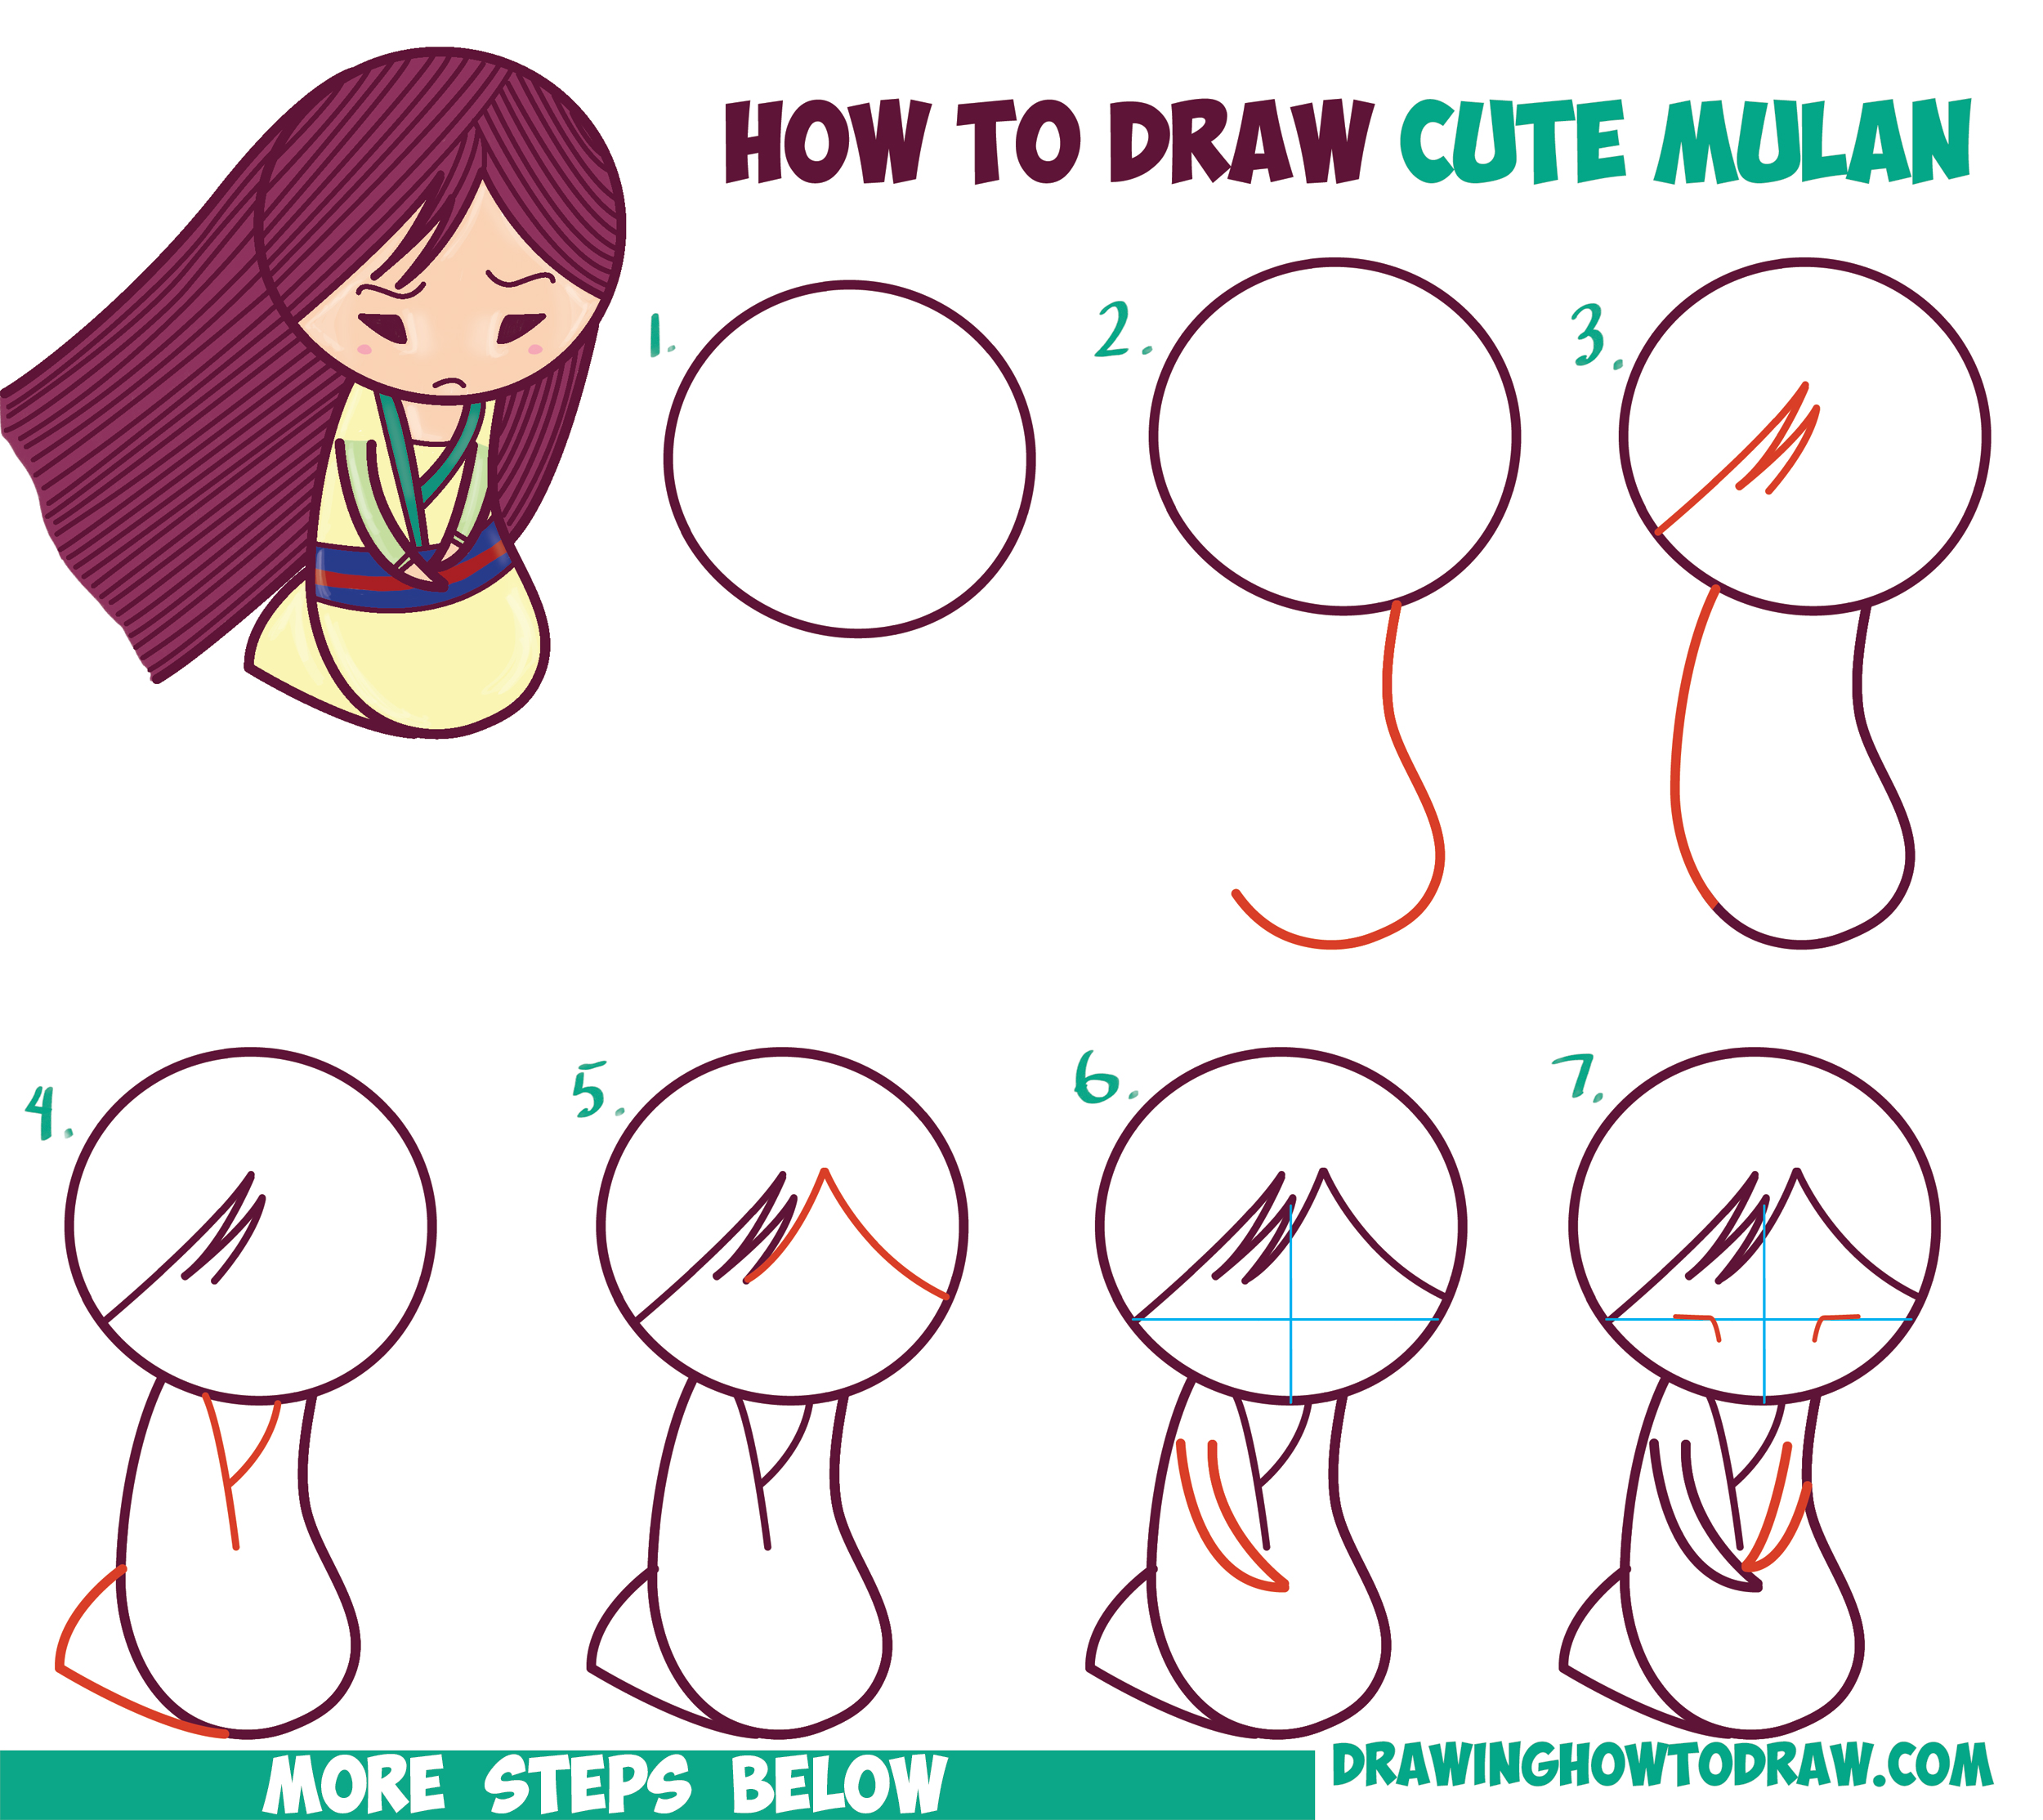 How To Draw Cute Kawaii Chibi Mulan The Chinese Disney Princess Easy Step By Step Drawing Tutorial For Beginners How To Draw Step By Step Drawing Tutorials